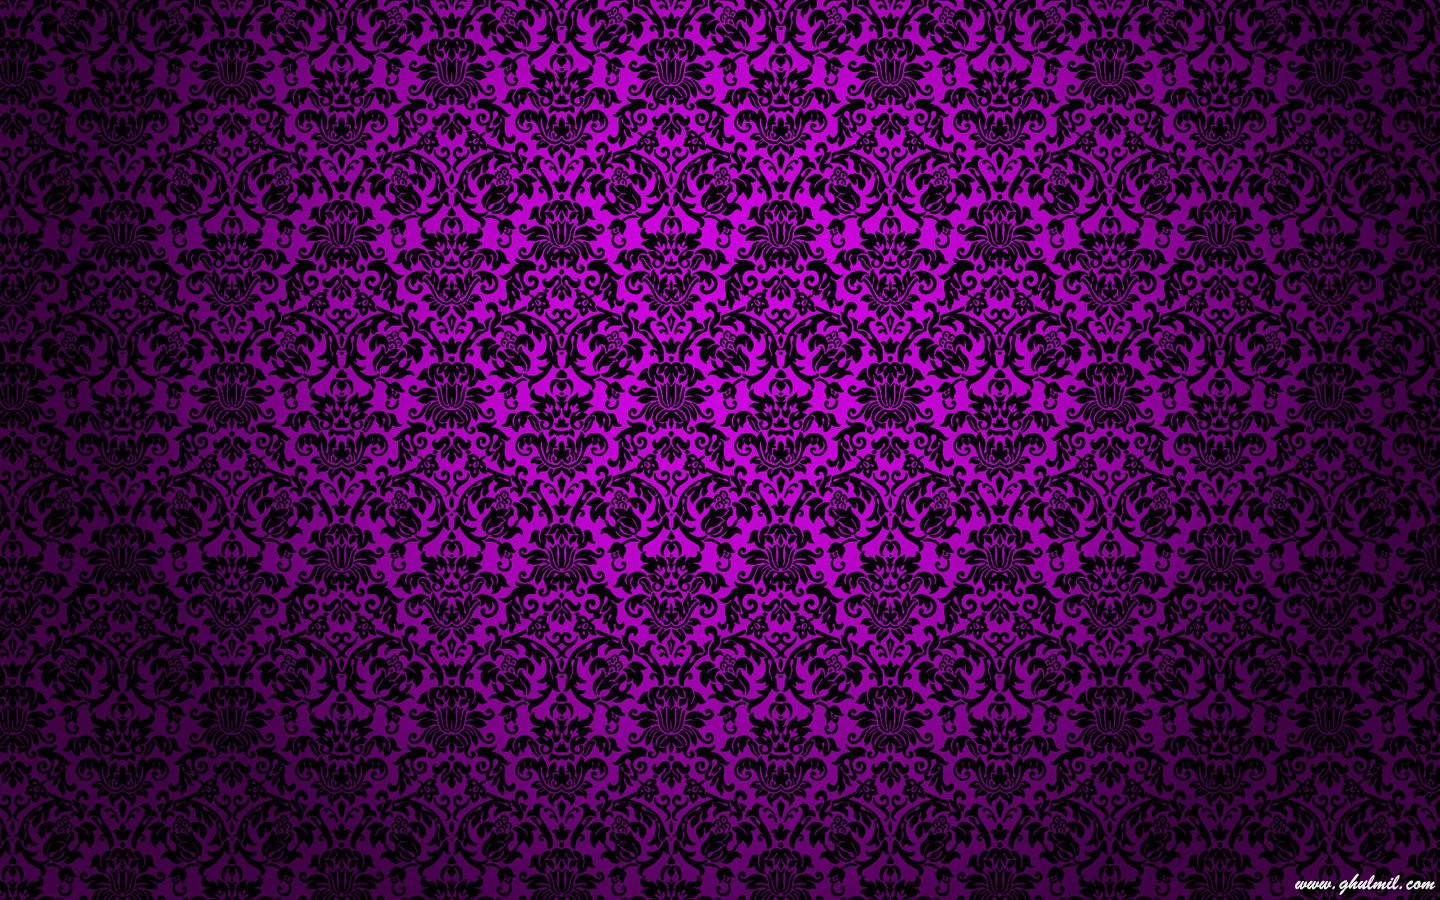 purple wallpaper designs 2015   Grasscloth Wallpaper